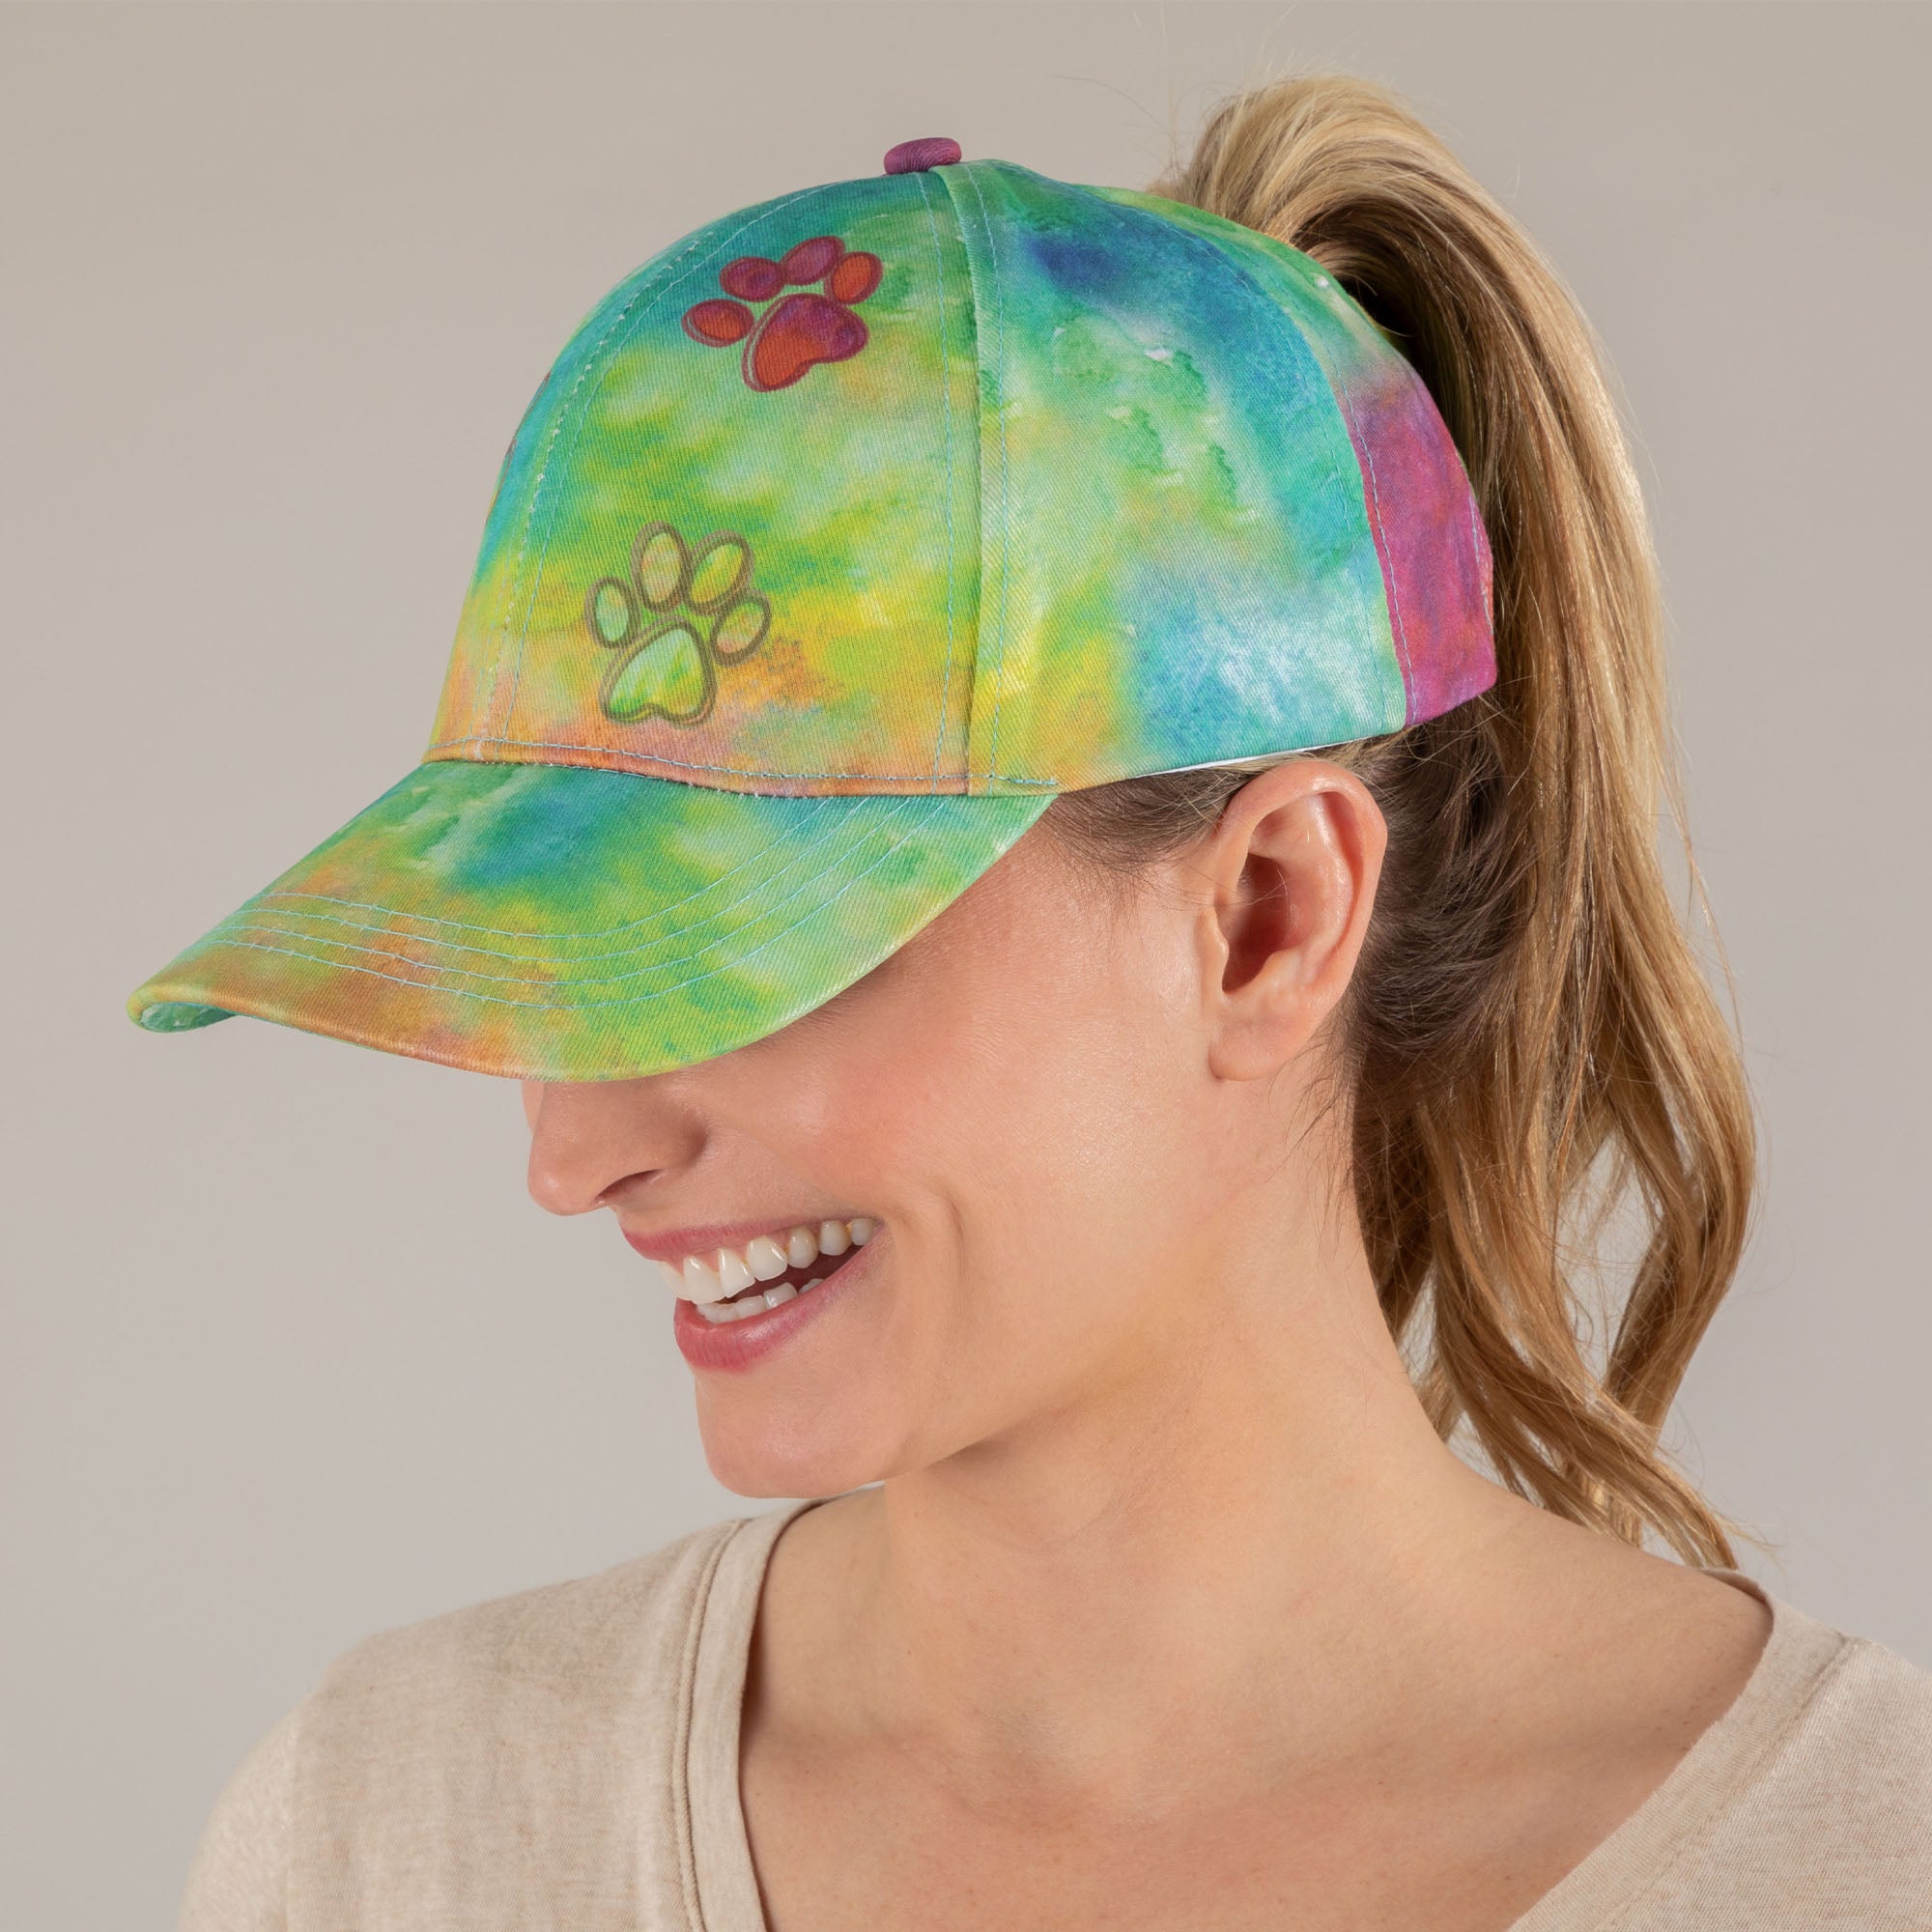 Paw Print Tie-Dye Ponytail Hat - Multi